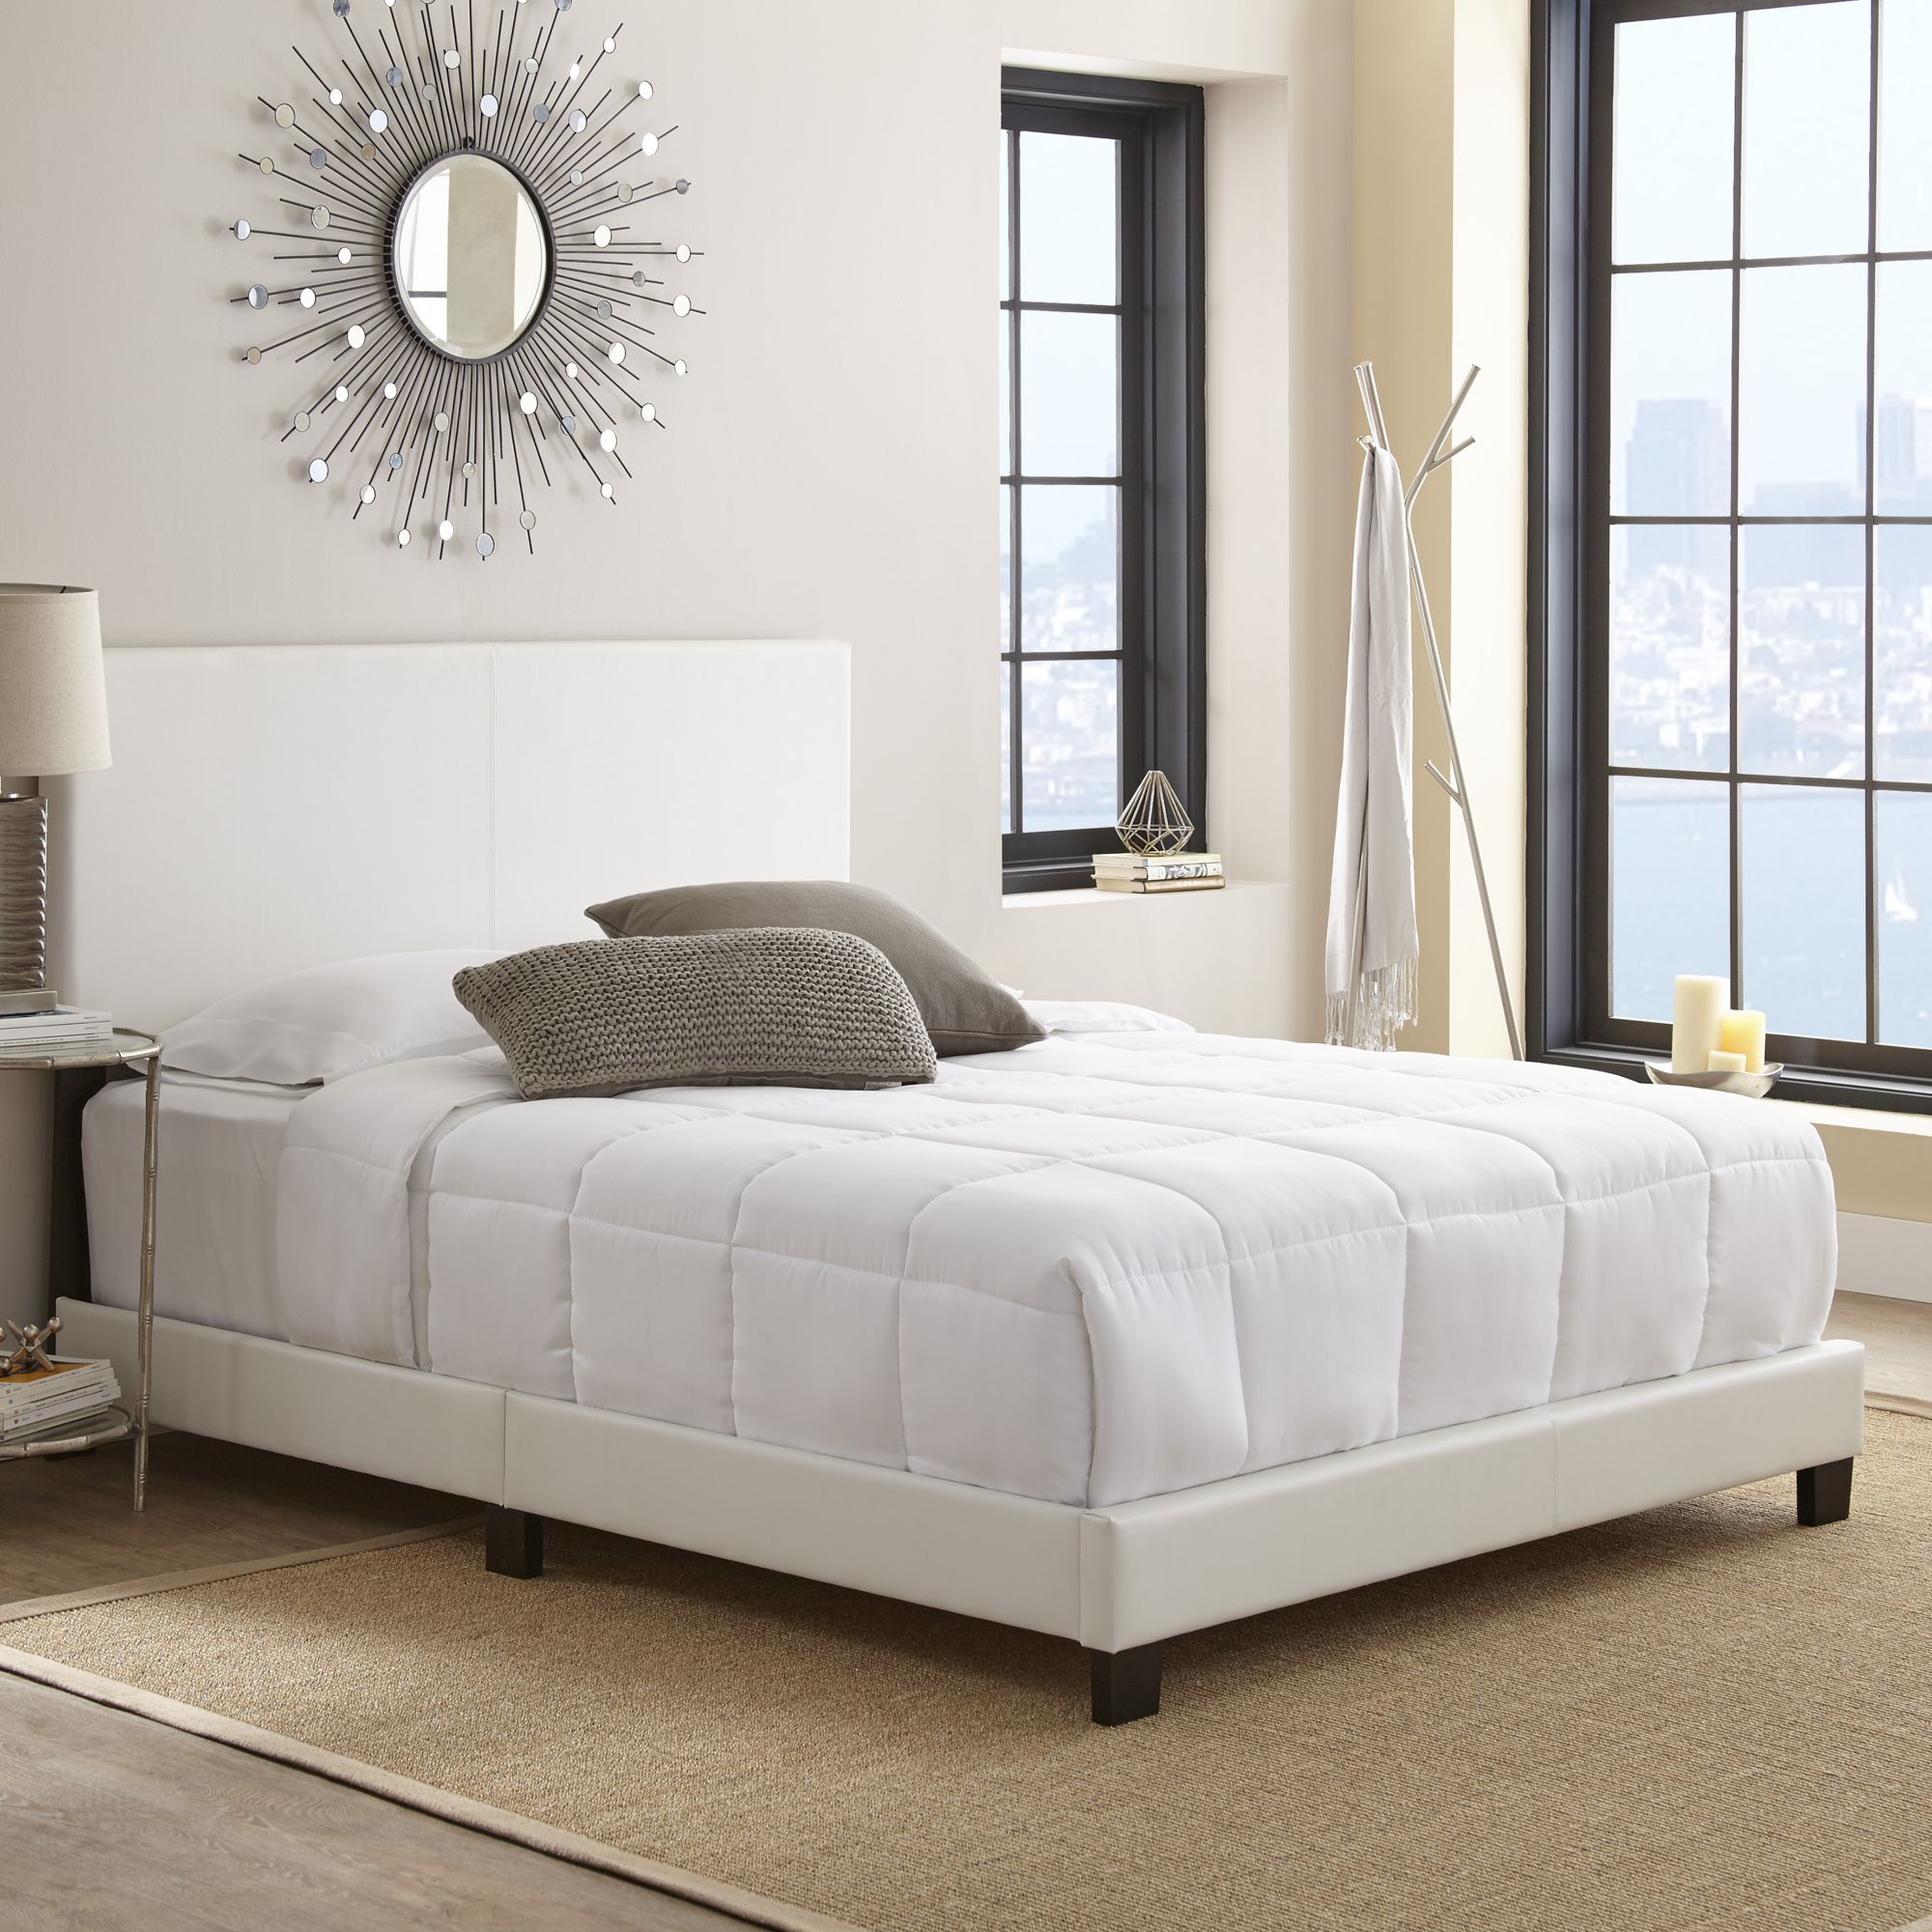 Contour Rest Garnet Full Size Simulated Leather Platform Bed Frame - White